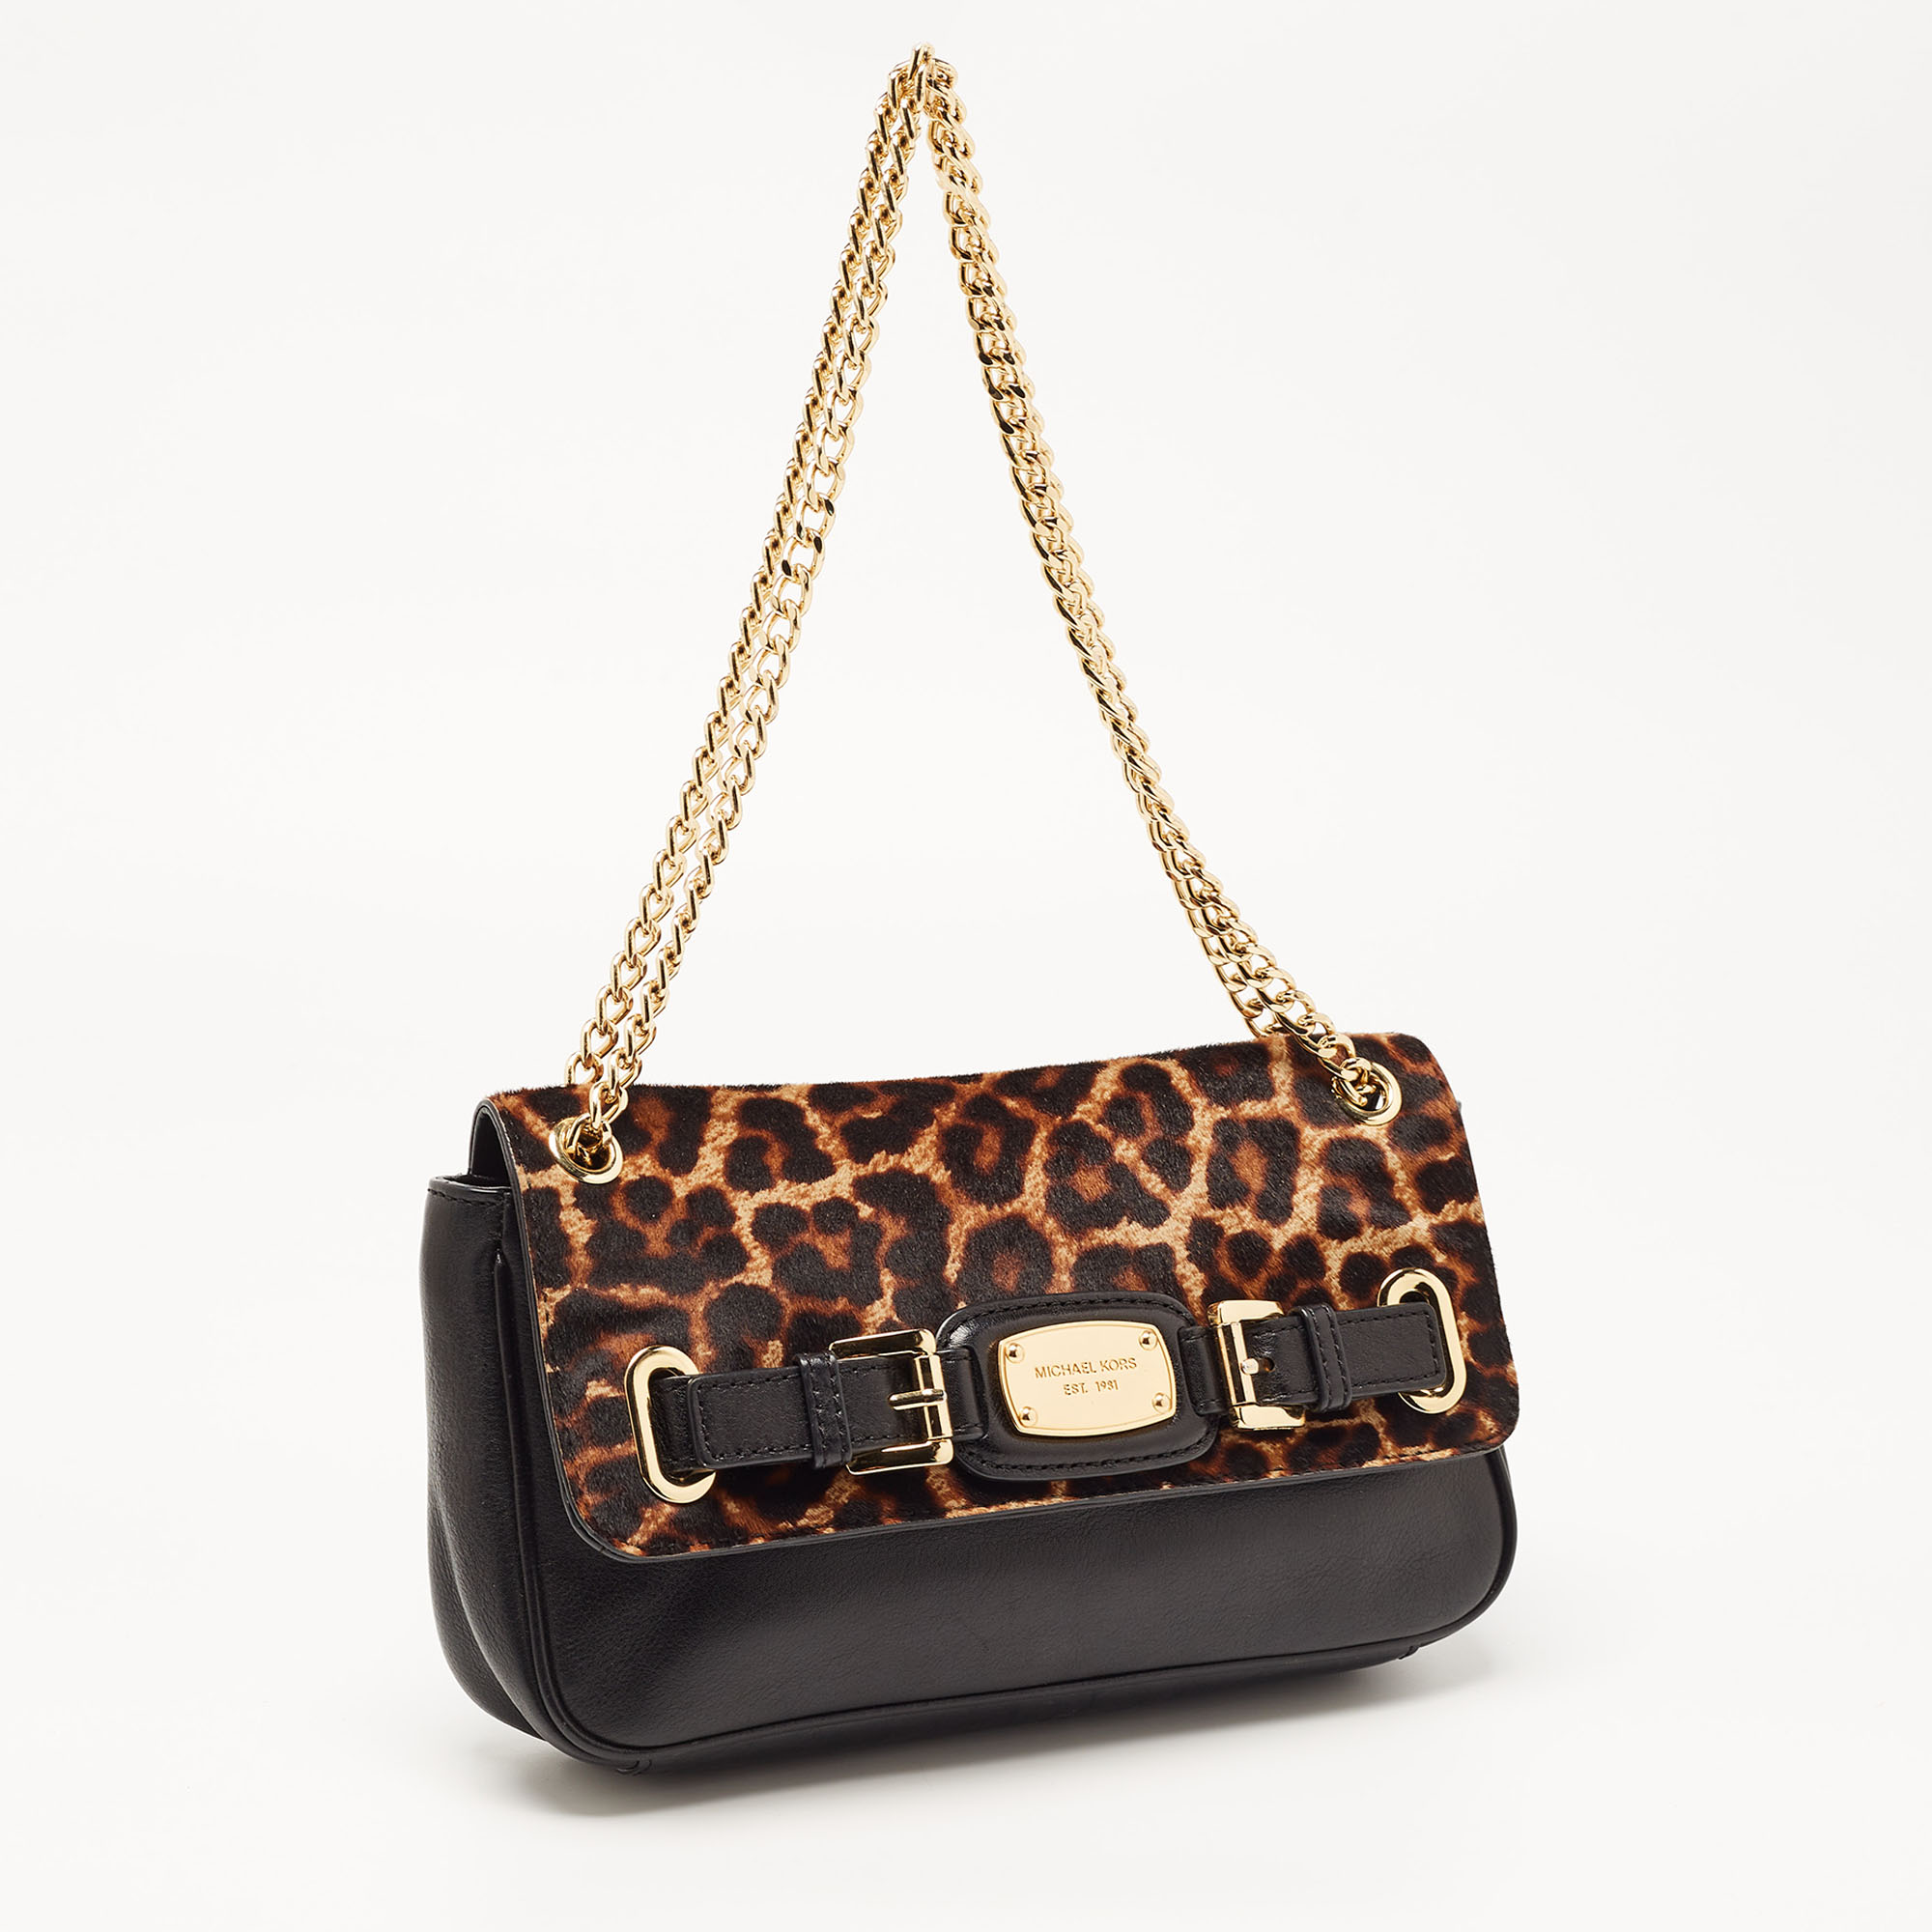 MICHAEL Michael Kors Black/Brown Leopard Calfhair And Leather Buckle Flap Shoulder Bag